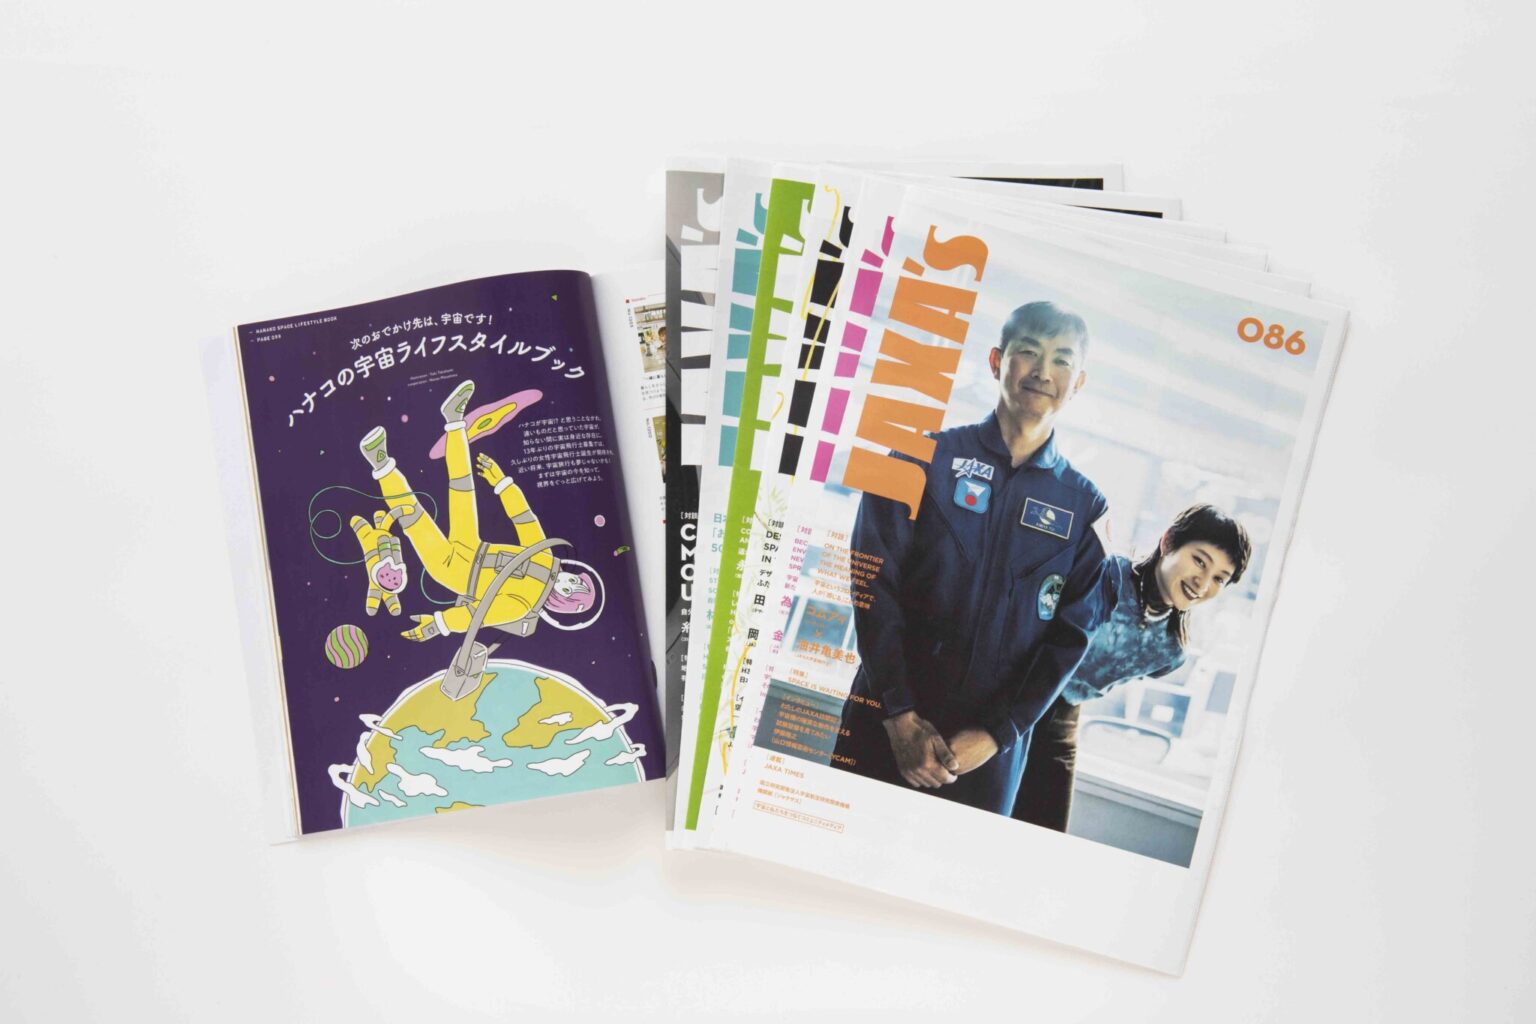 JAXAが発行している機関紙『JAXA’s』（右）と『Hanako』1204号で宇宙特集（左）。どちらも宇宙の今をわかりやすく伝えている。